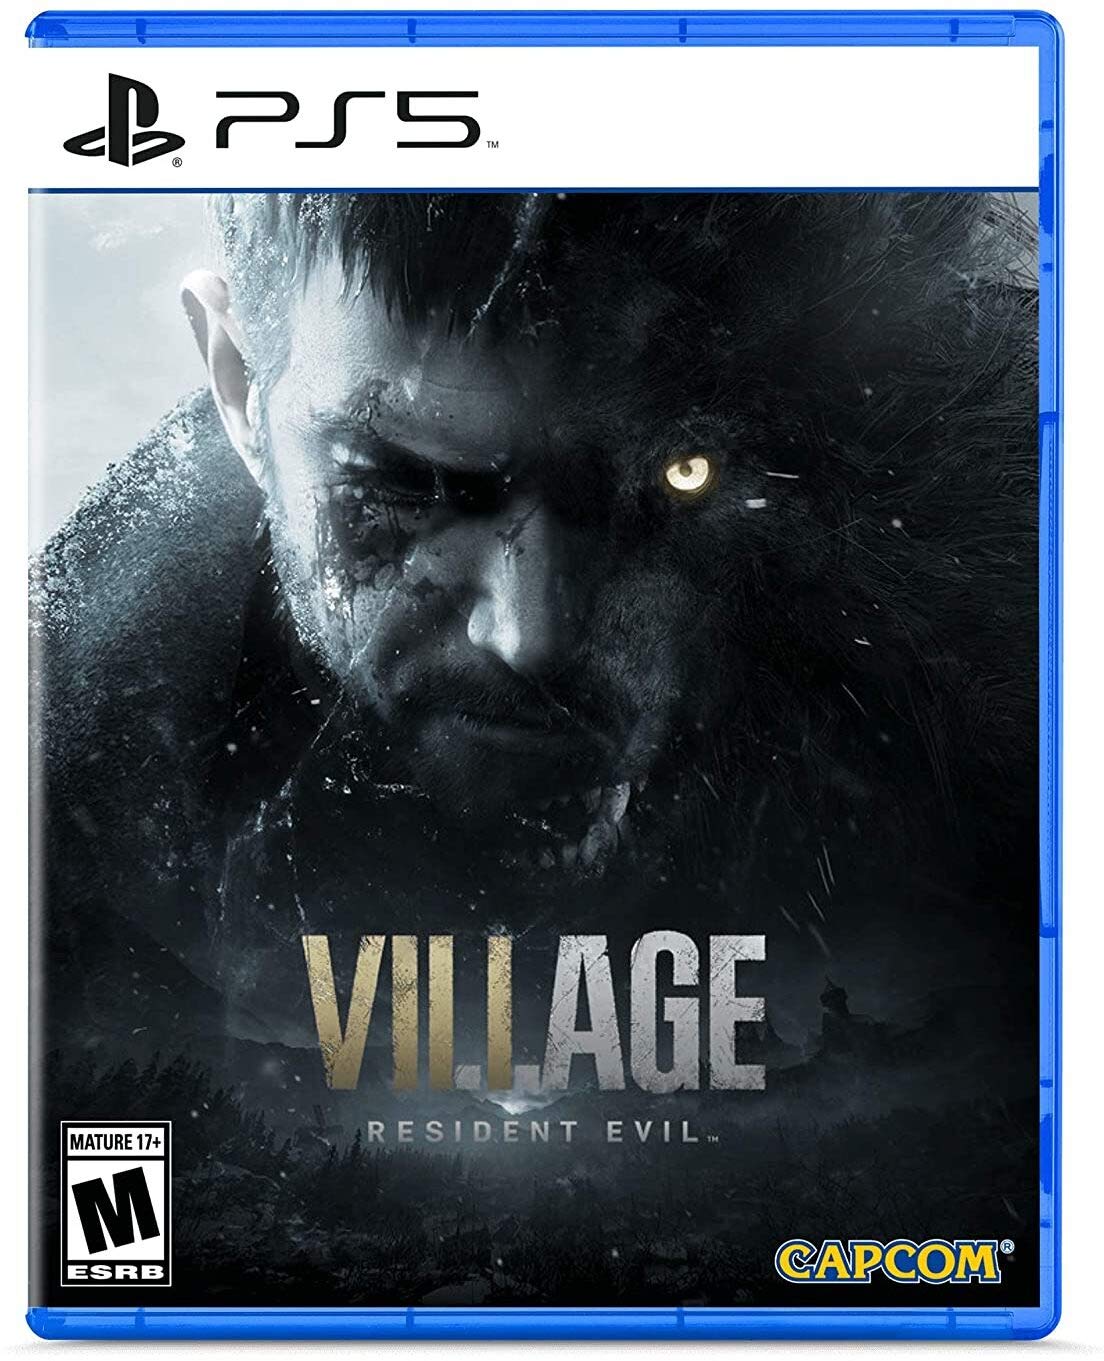 PS5 Game Village Resident Evil, SON-VILLAGE